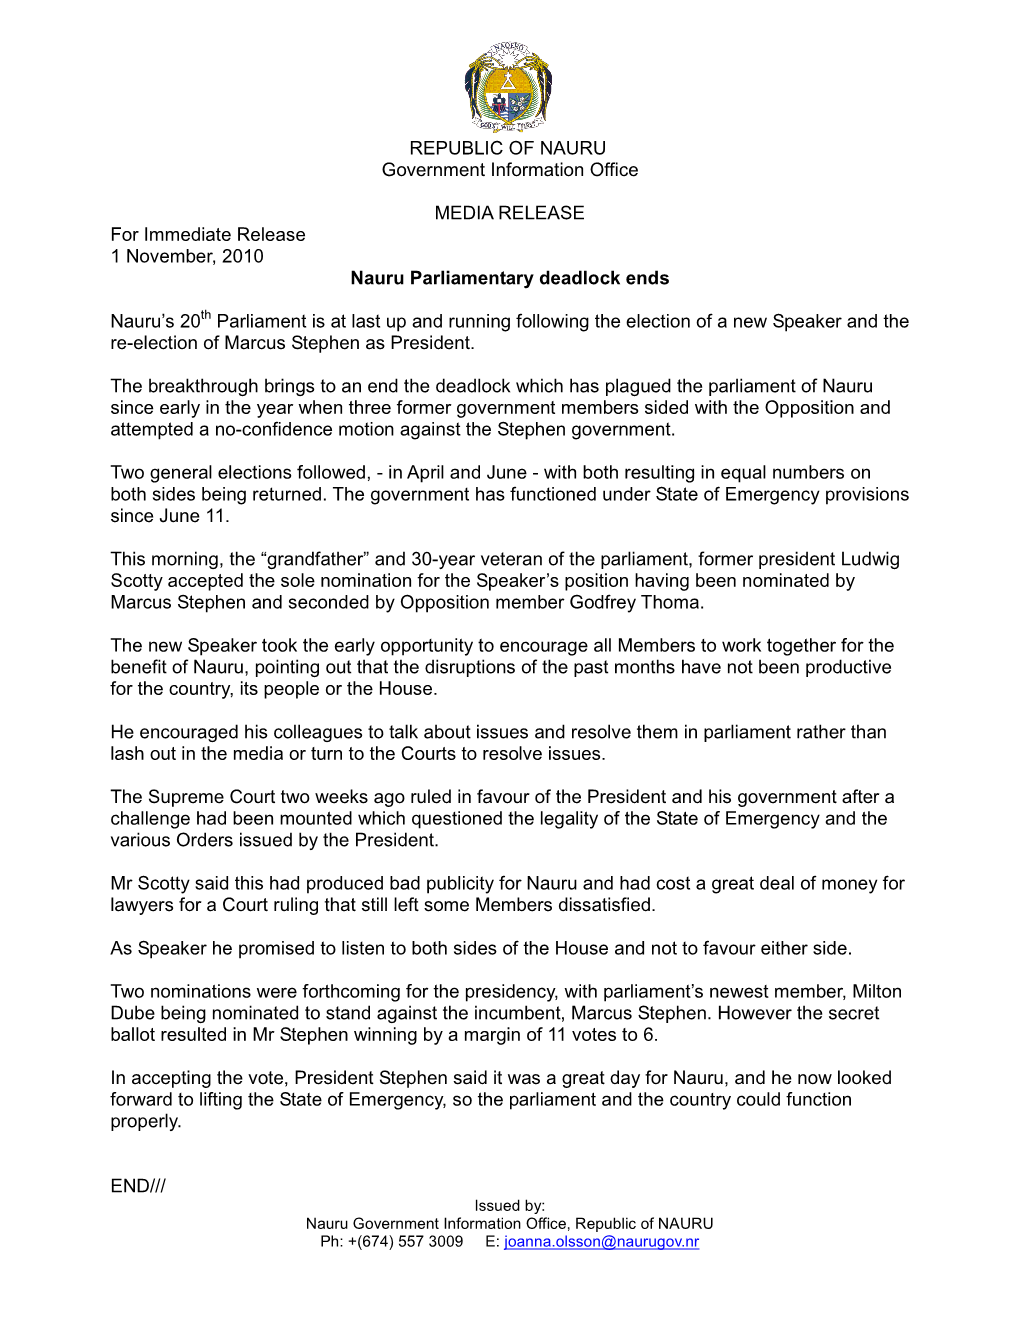 MEDIA RELEASE for Immediate Release 1 November, 2010 Nauru Parliamentary Deadlock Ends